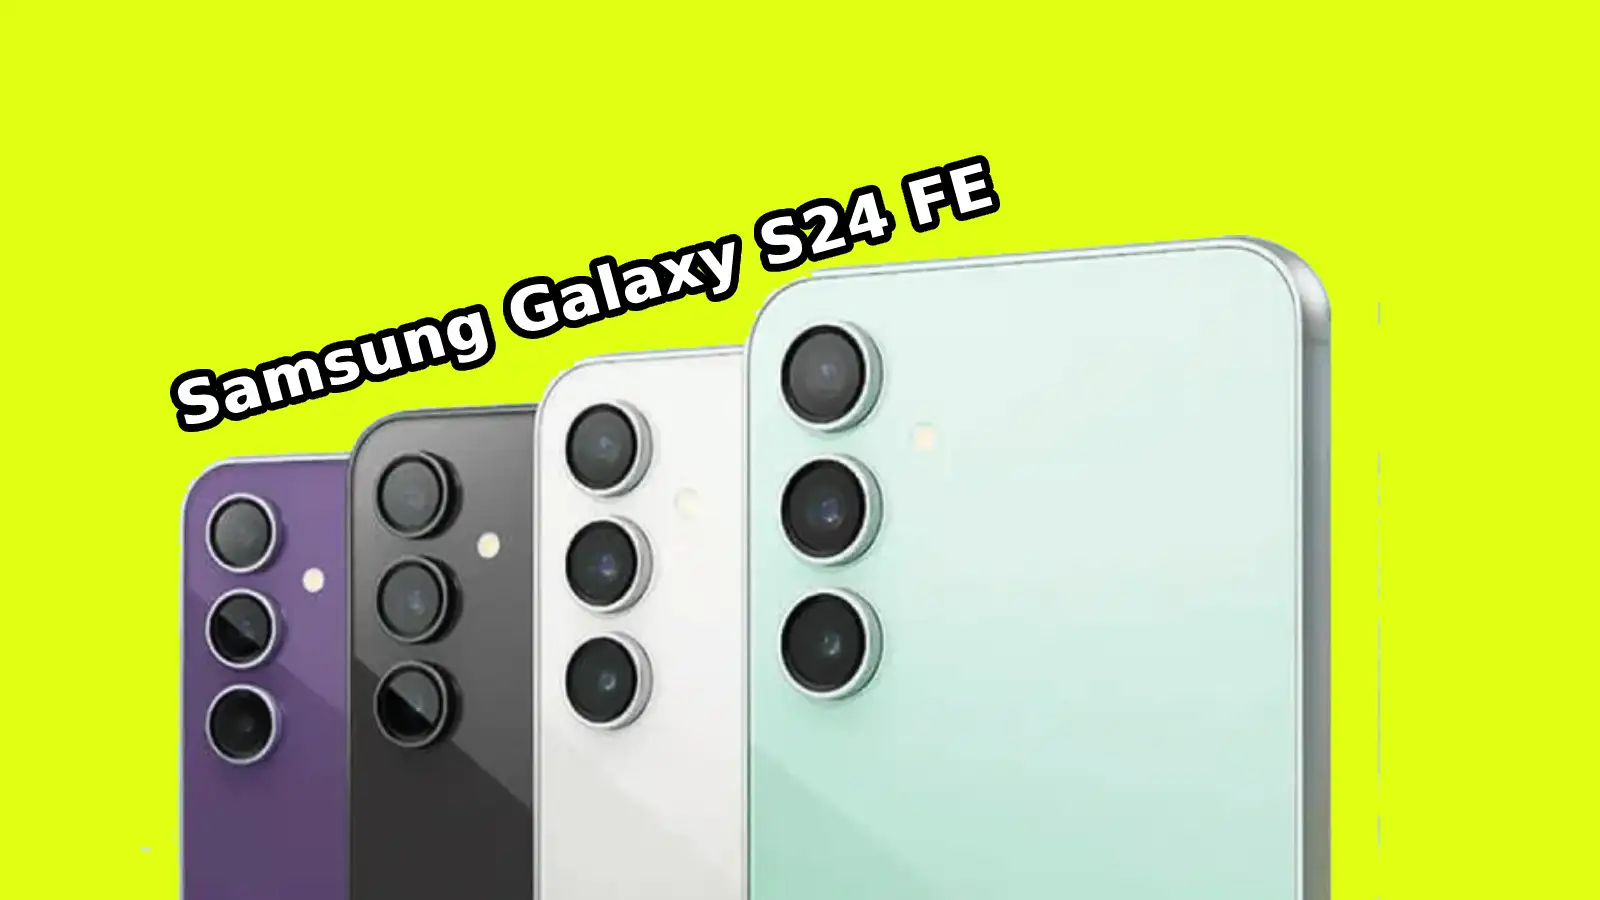 Samsung Galaxy S24 FE Online Görüntülendi!